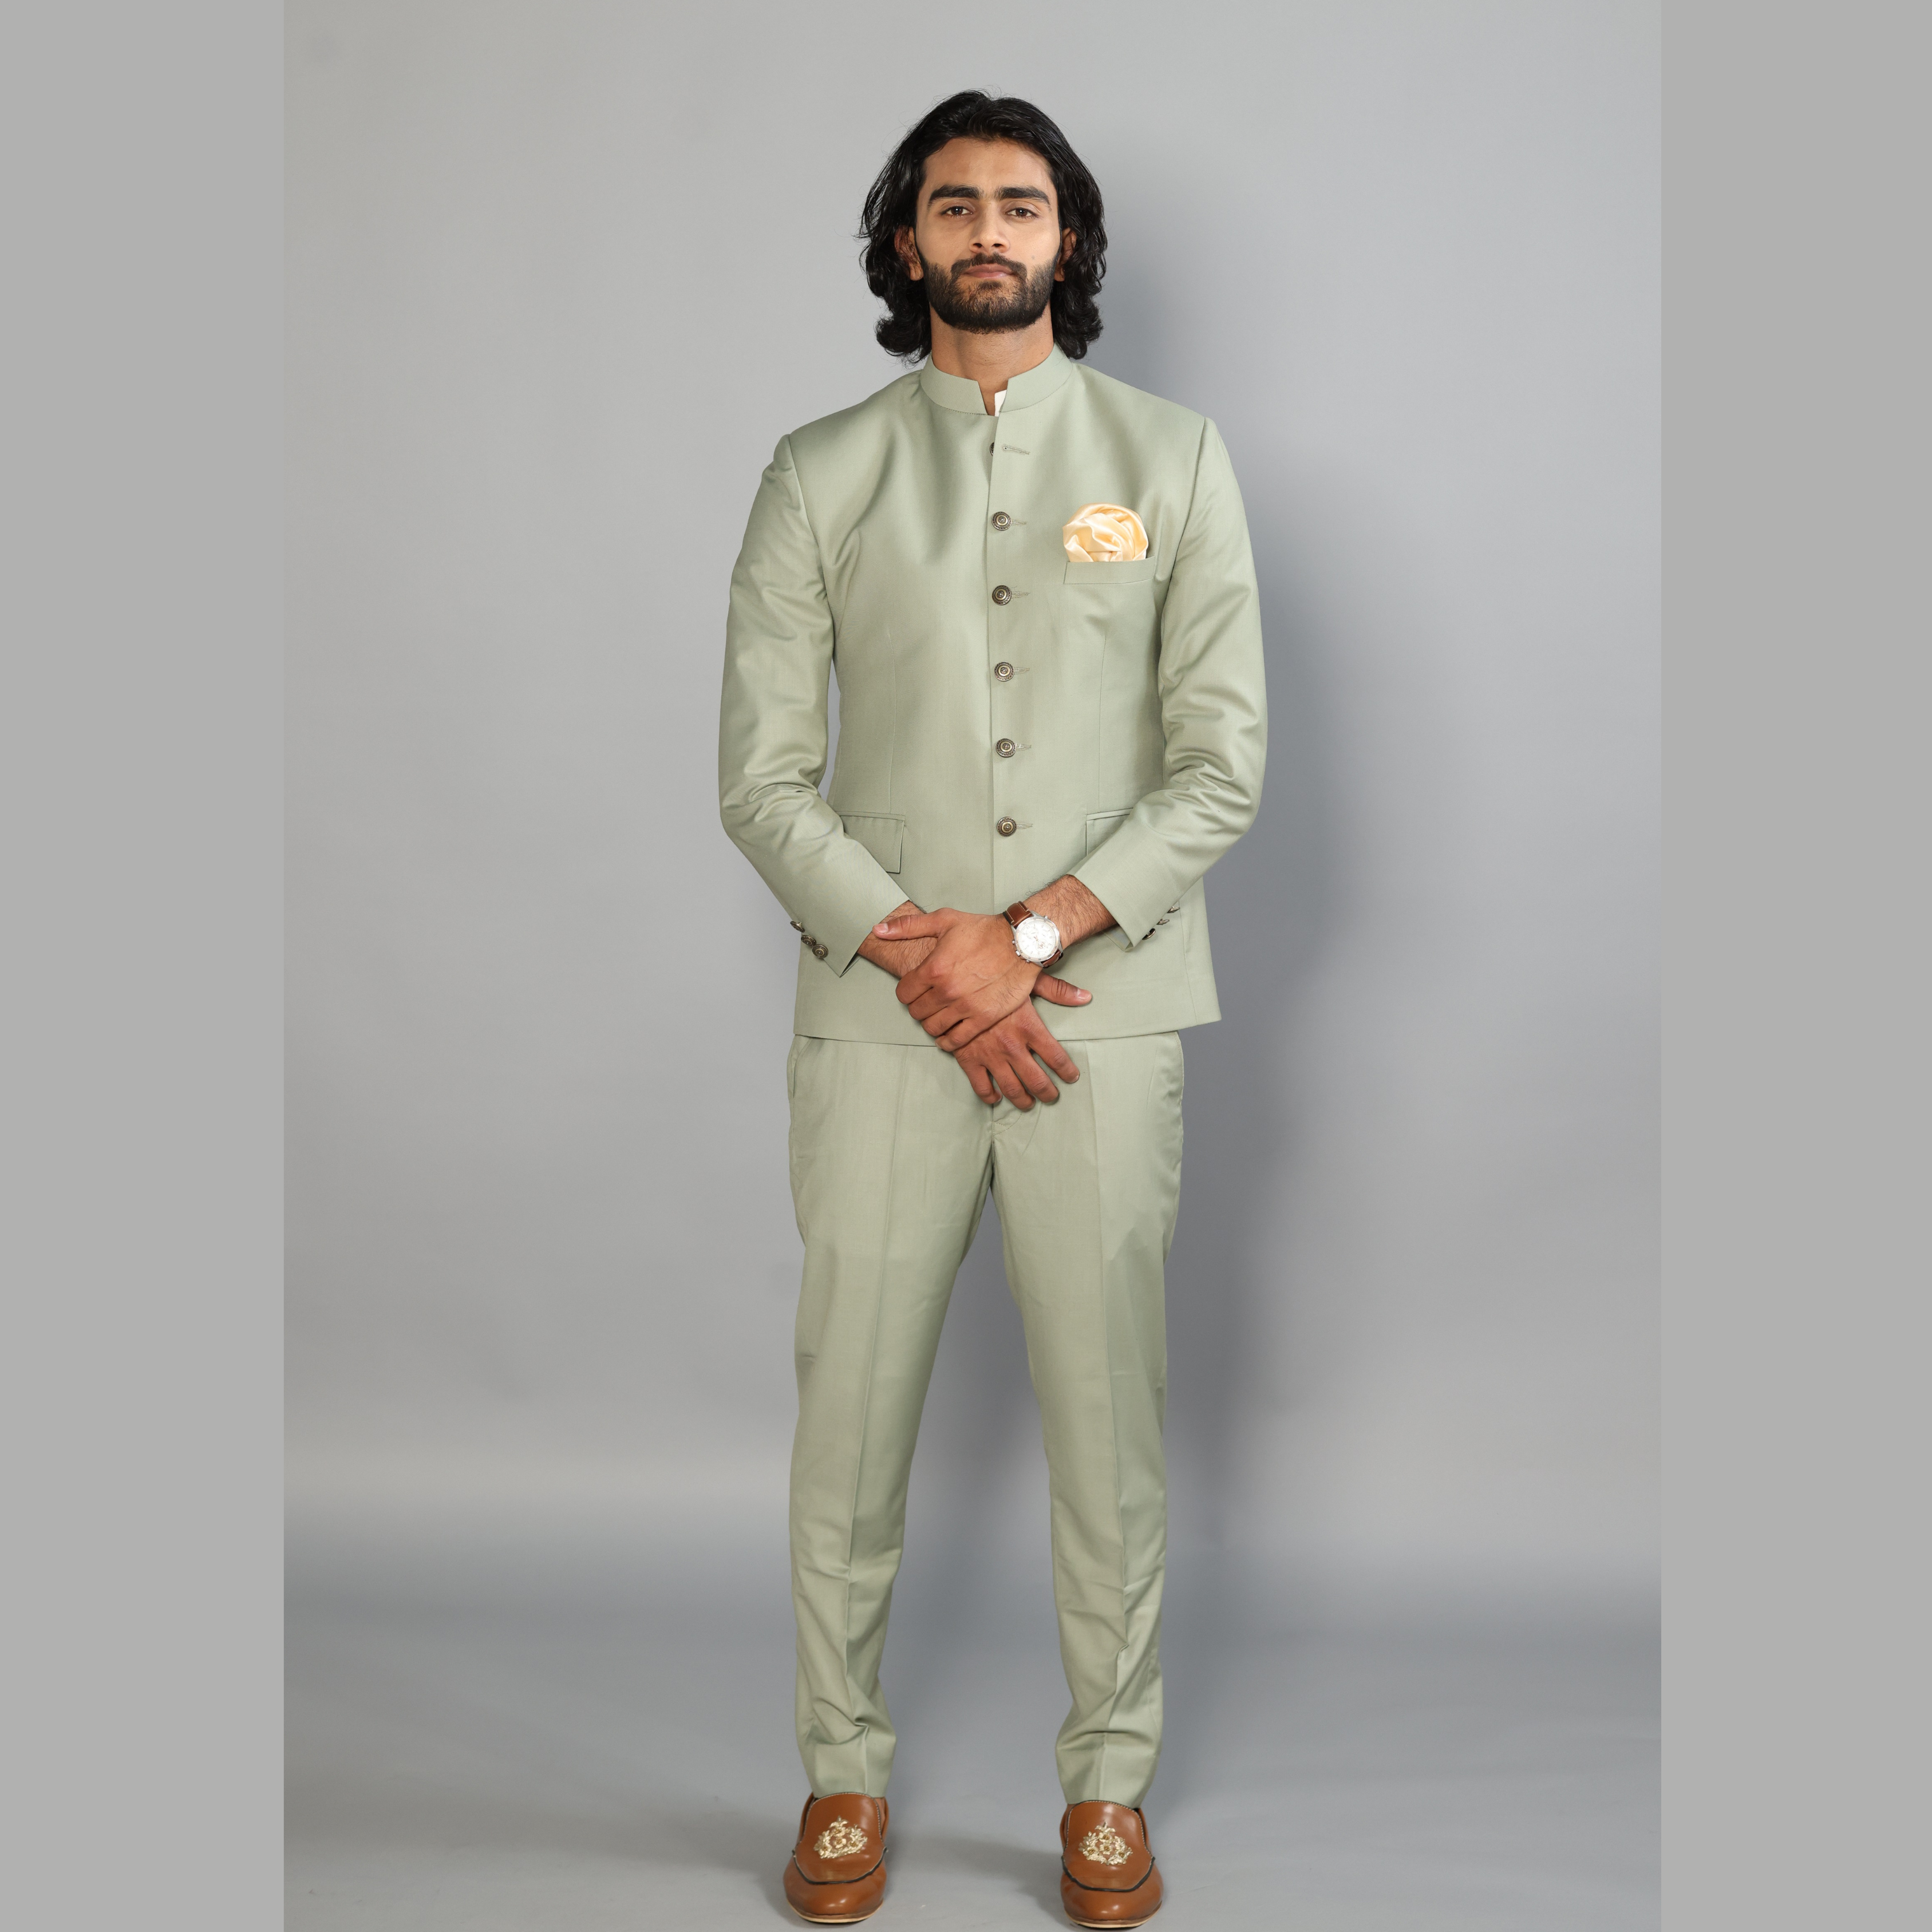 Custom-tailored Classic Off- White Royal Jodhpuri Bandhgala at Rs 8499.00 | Bandhgala  suit, Jodhpuri suits for men, Wedding bandhgala, Stylish jodhpuri suit,  Designer jodhpri suit - Rajanyas Ecommerce Private Limited, Yamuna Nagar |  ID: 27531566591